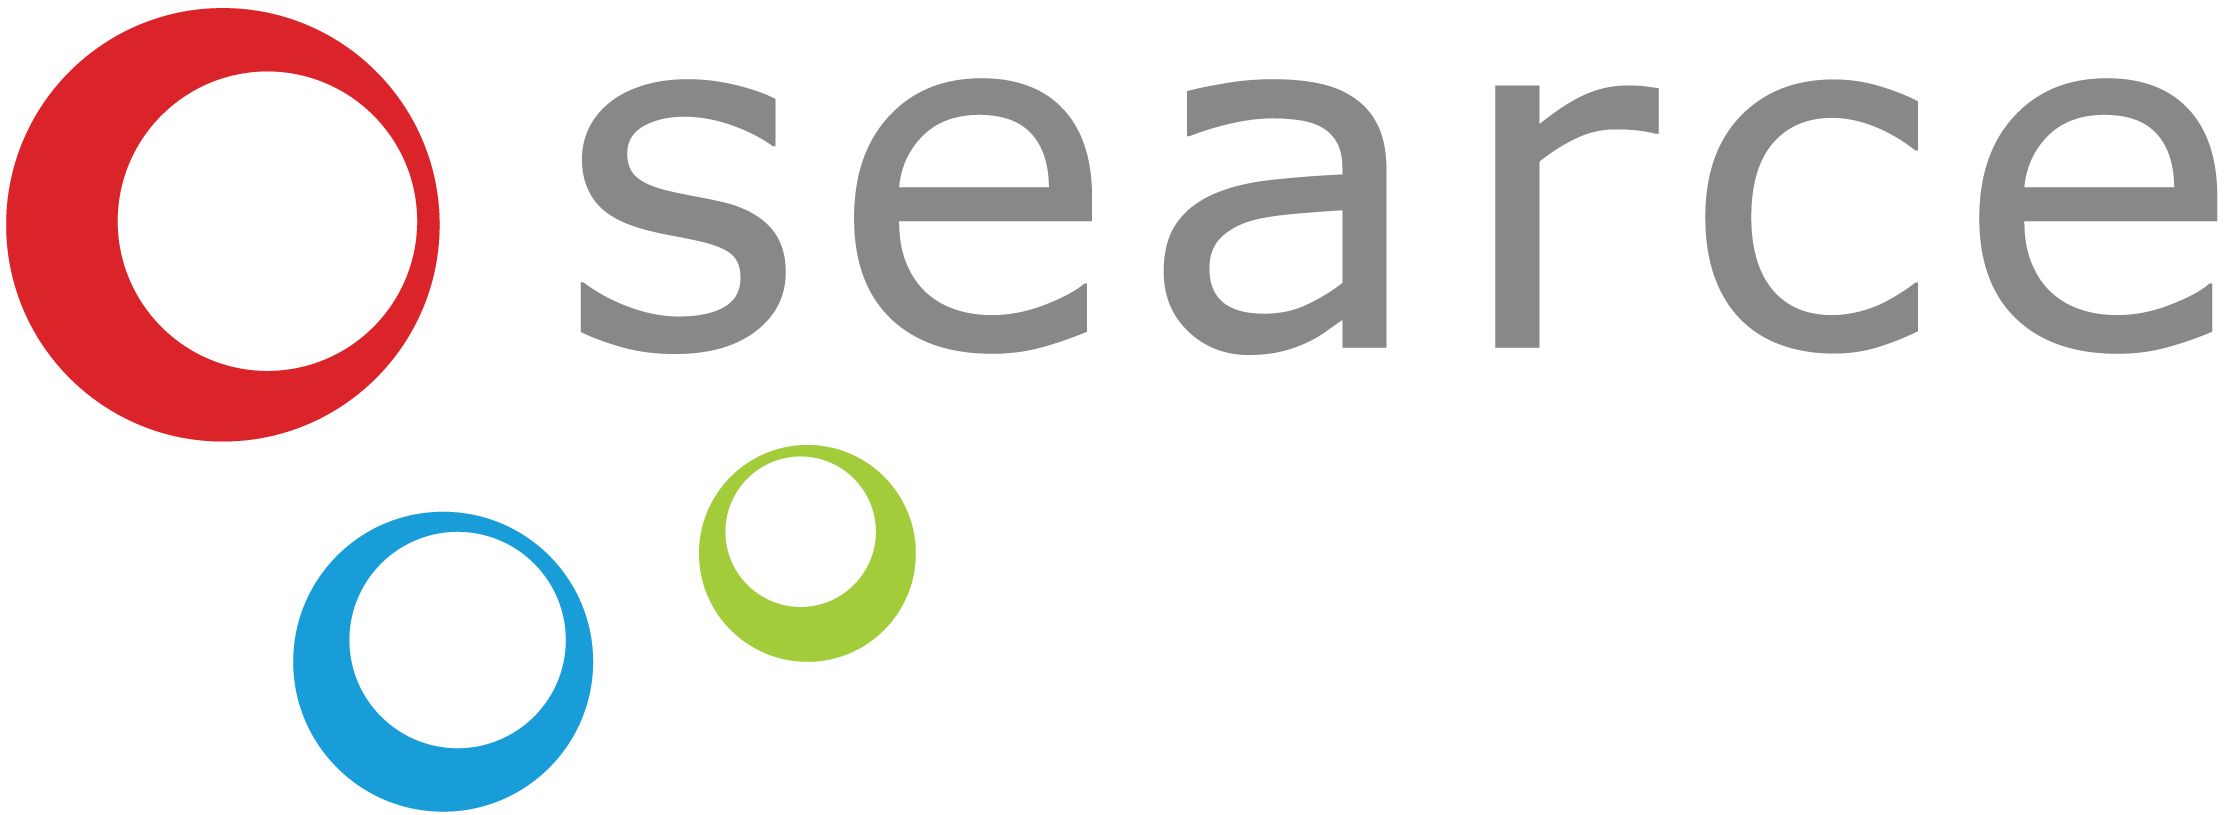 Searce Logo